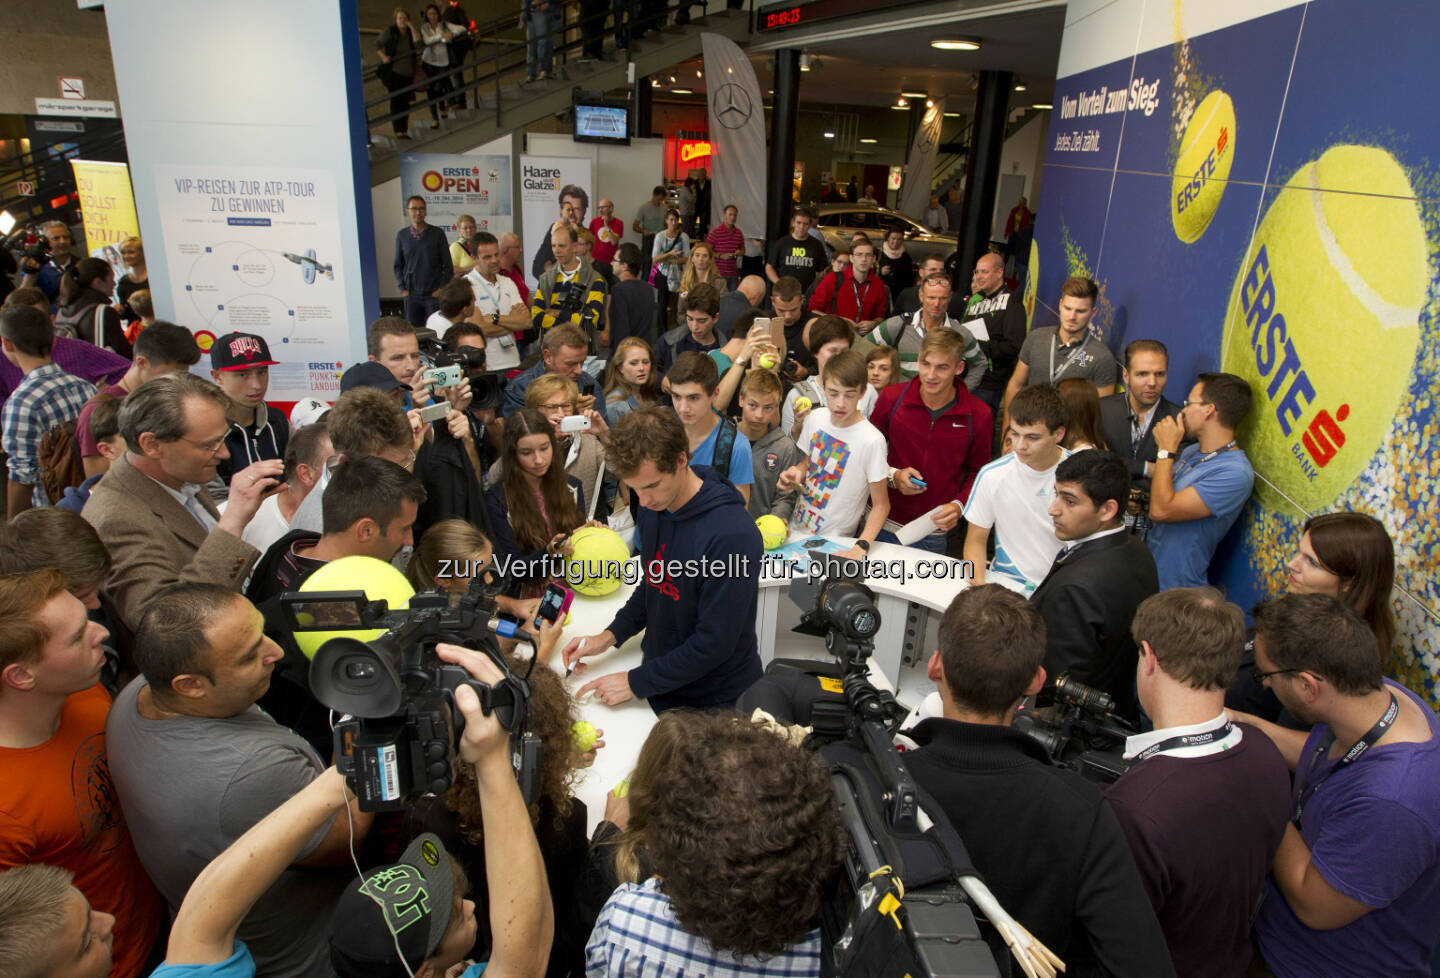 Andy Murray bei der Autogrammstunde am Erste Bank Stand, Erste Bank Open 2014, Wr. Stadthalle 15.10.2014, Copyright e|motion/zolles.com